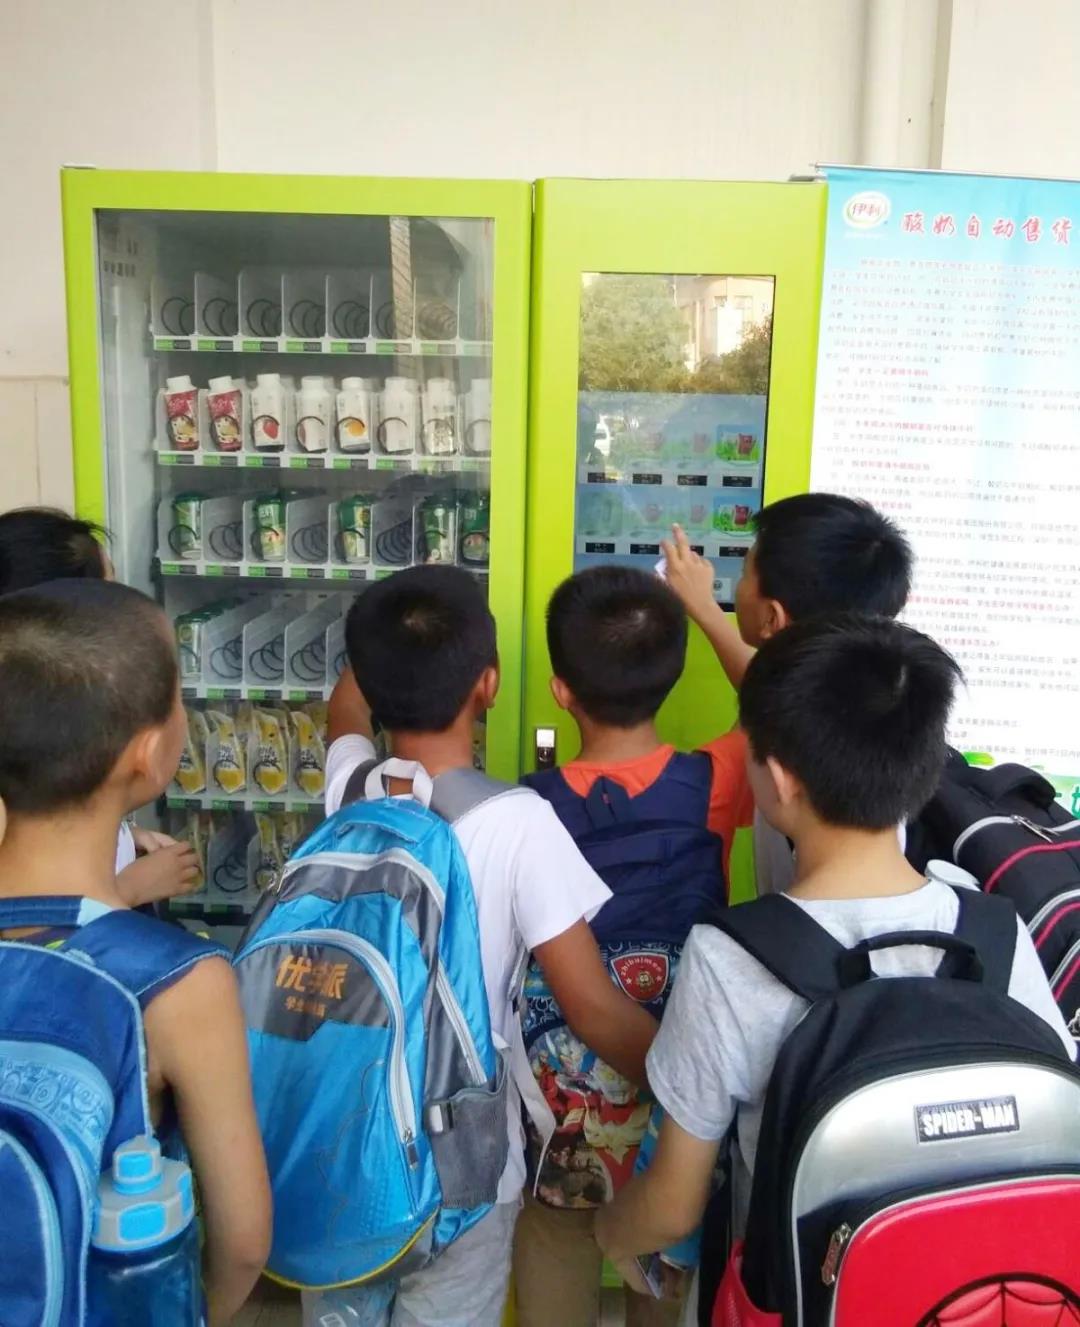 high school vending machine